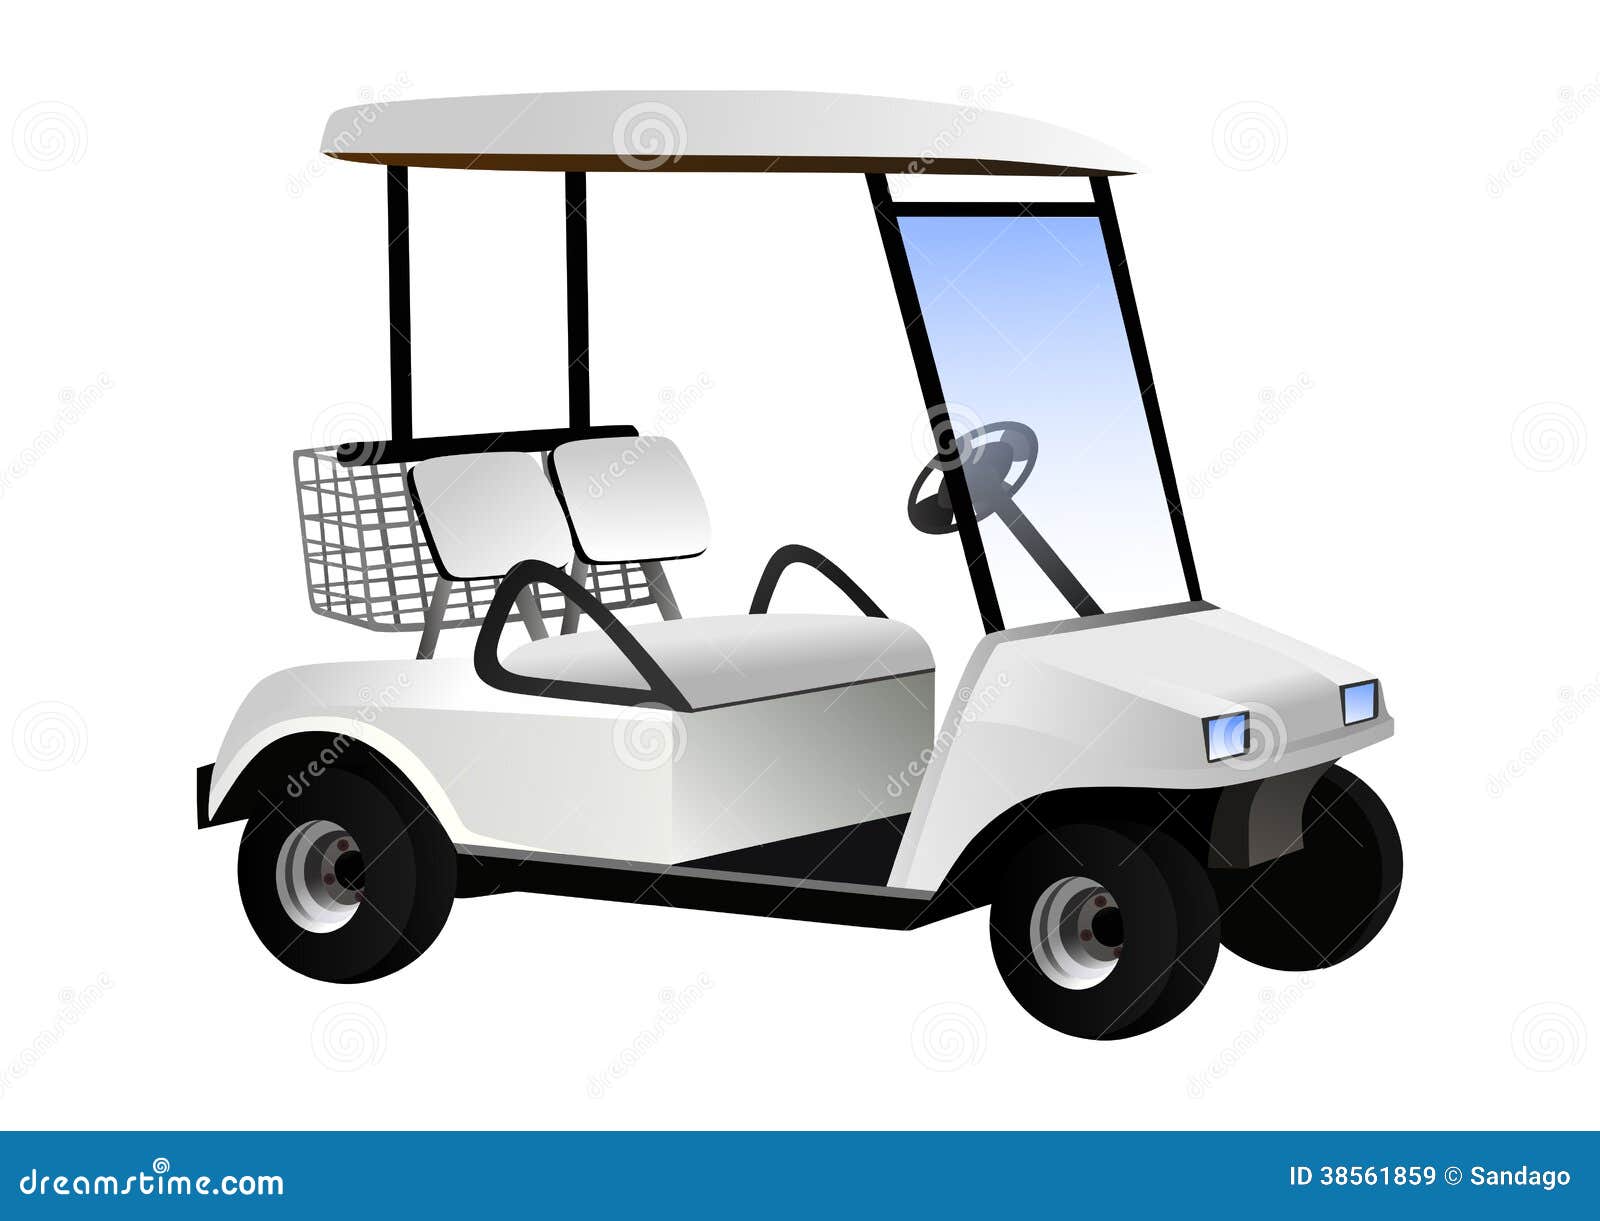 free clip art of golf cart - photo #22